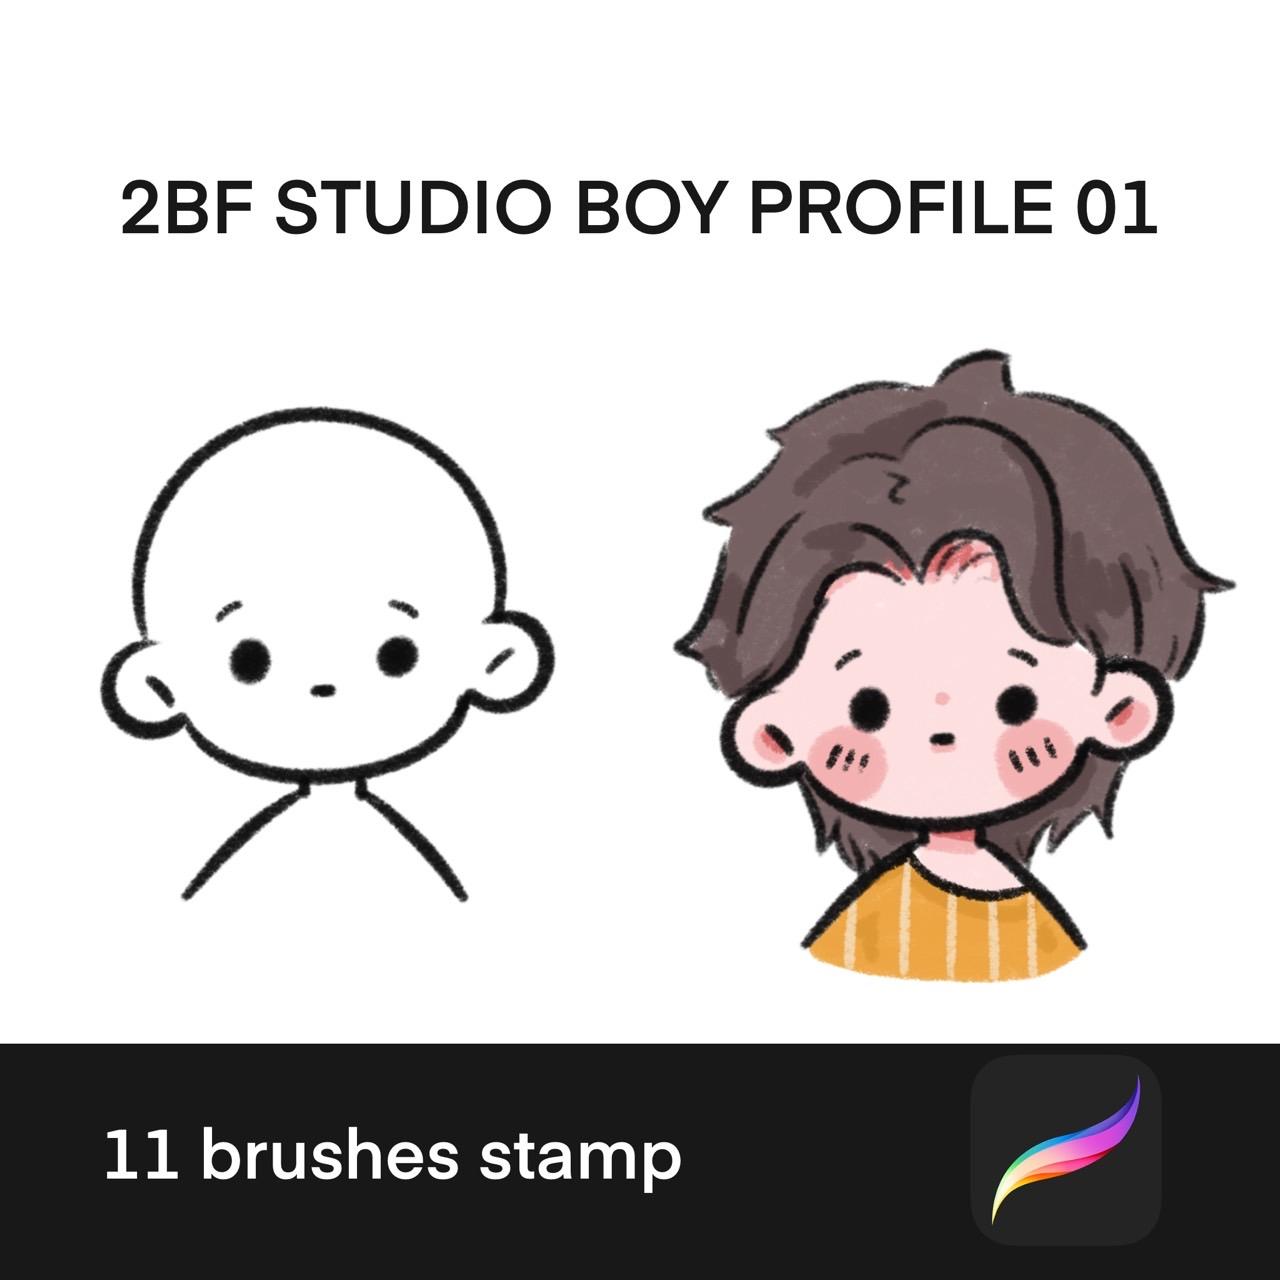 2BF STUDIO BOY PROFILE 01